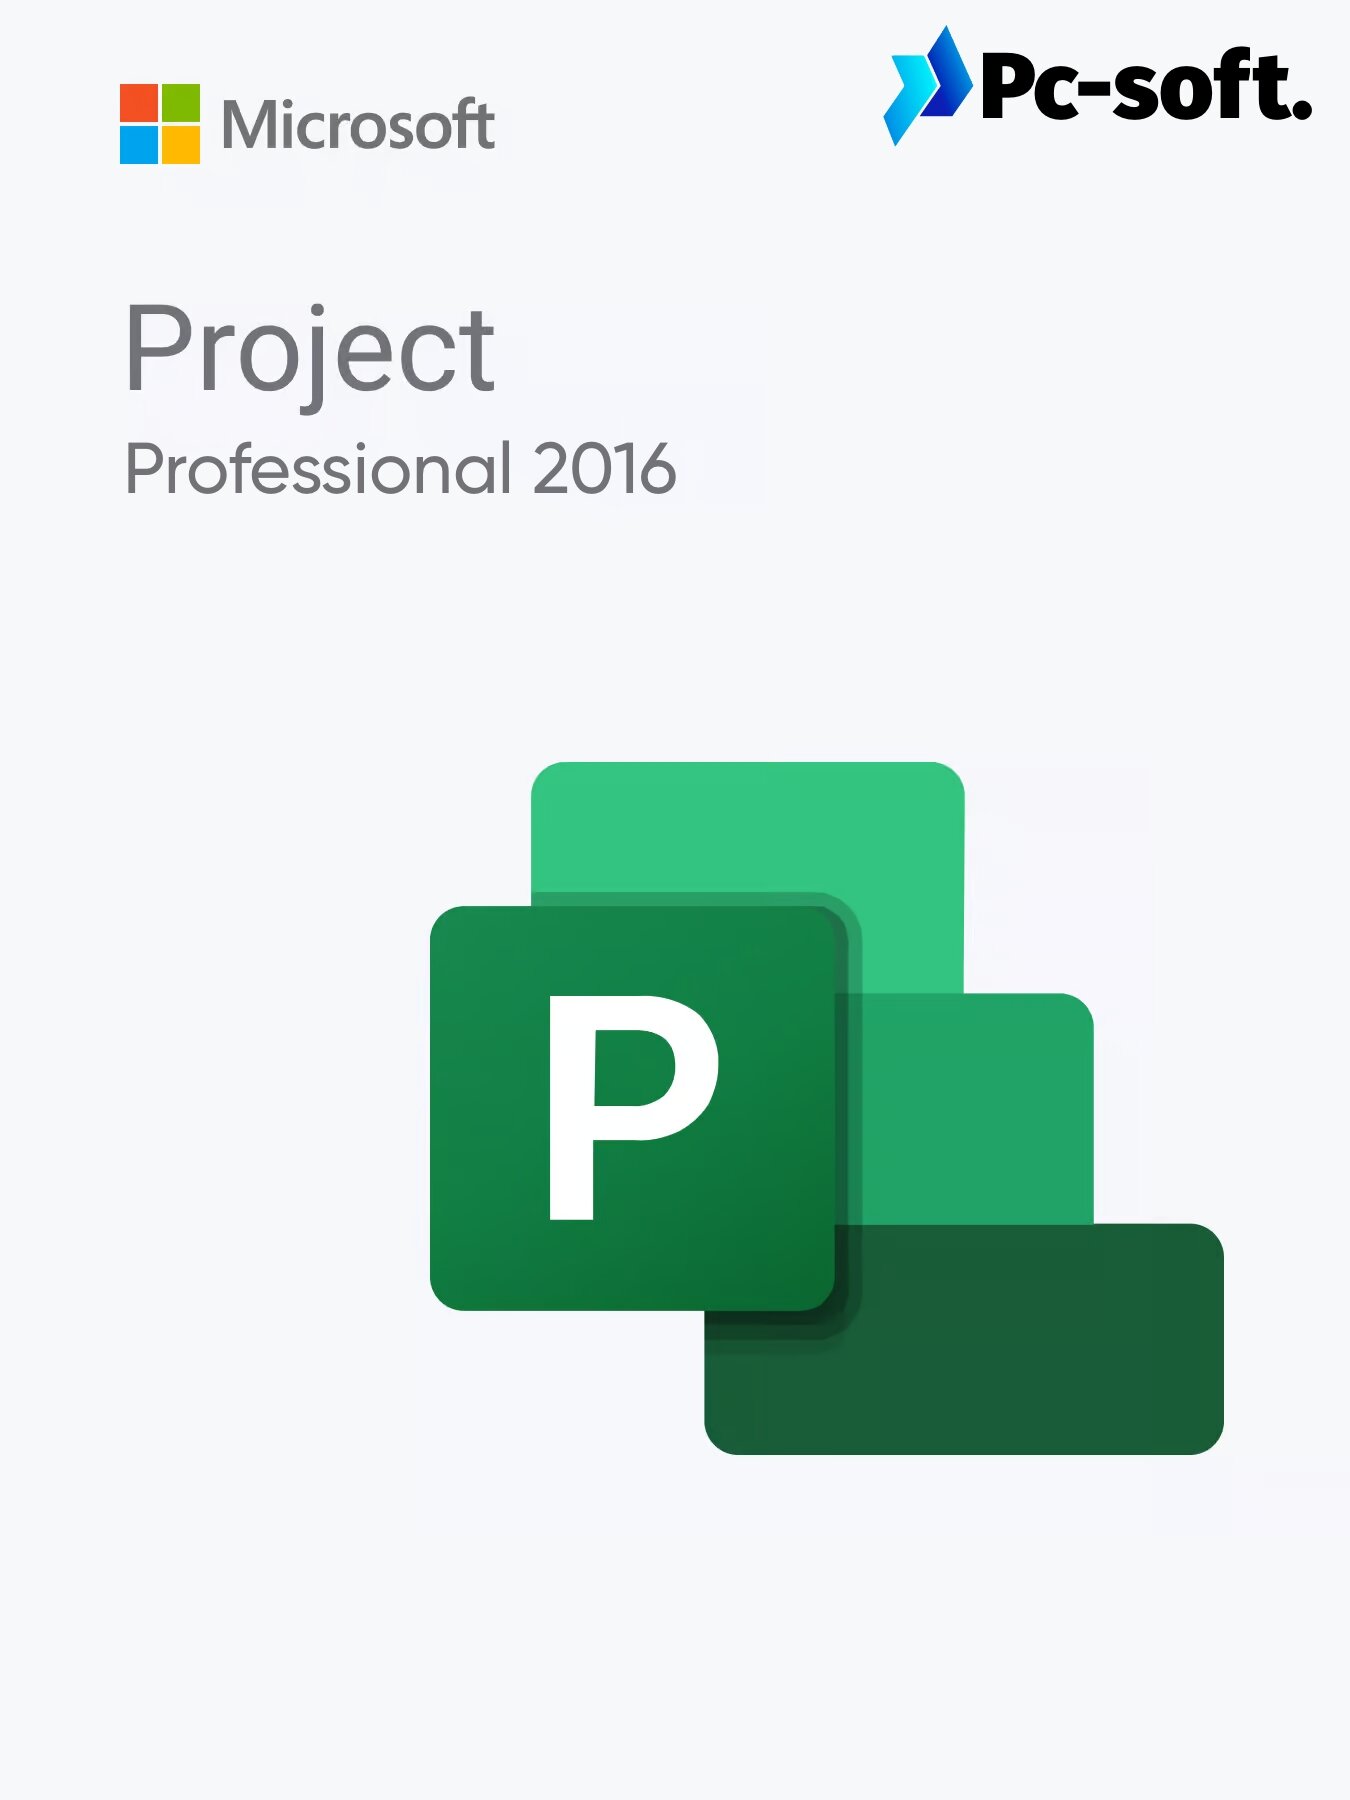 Microsoft Project 2016 Professional - Онлайн активация в программе, Лицензионный ключ / Русский язык